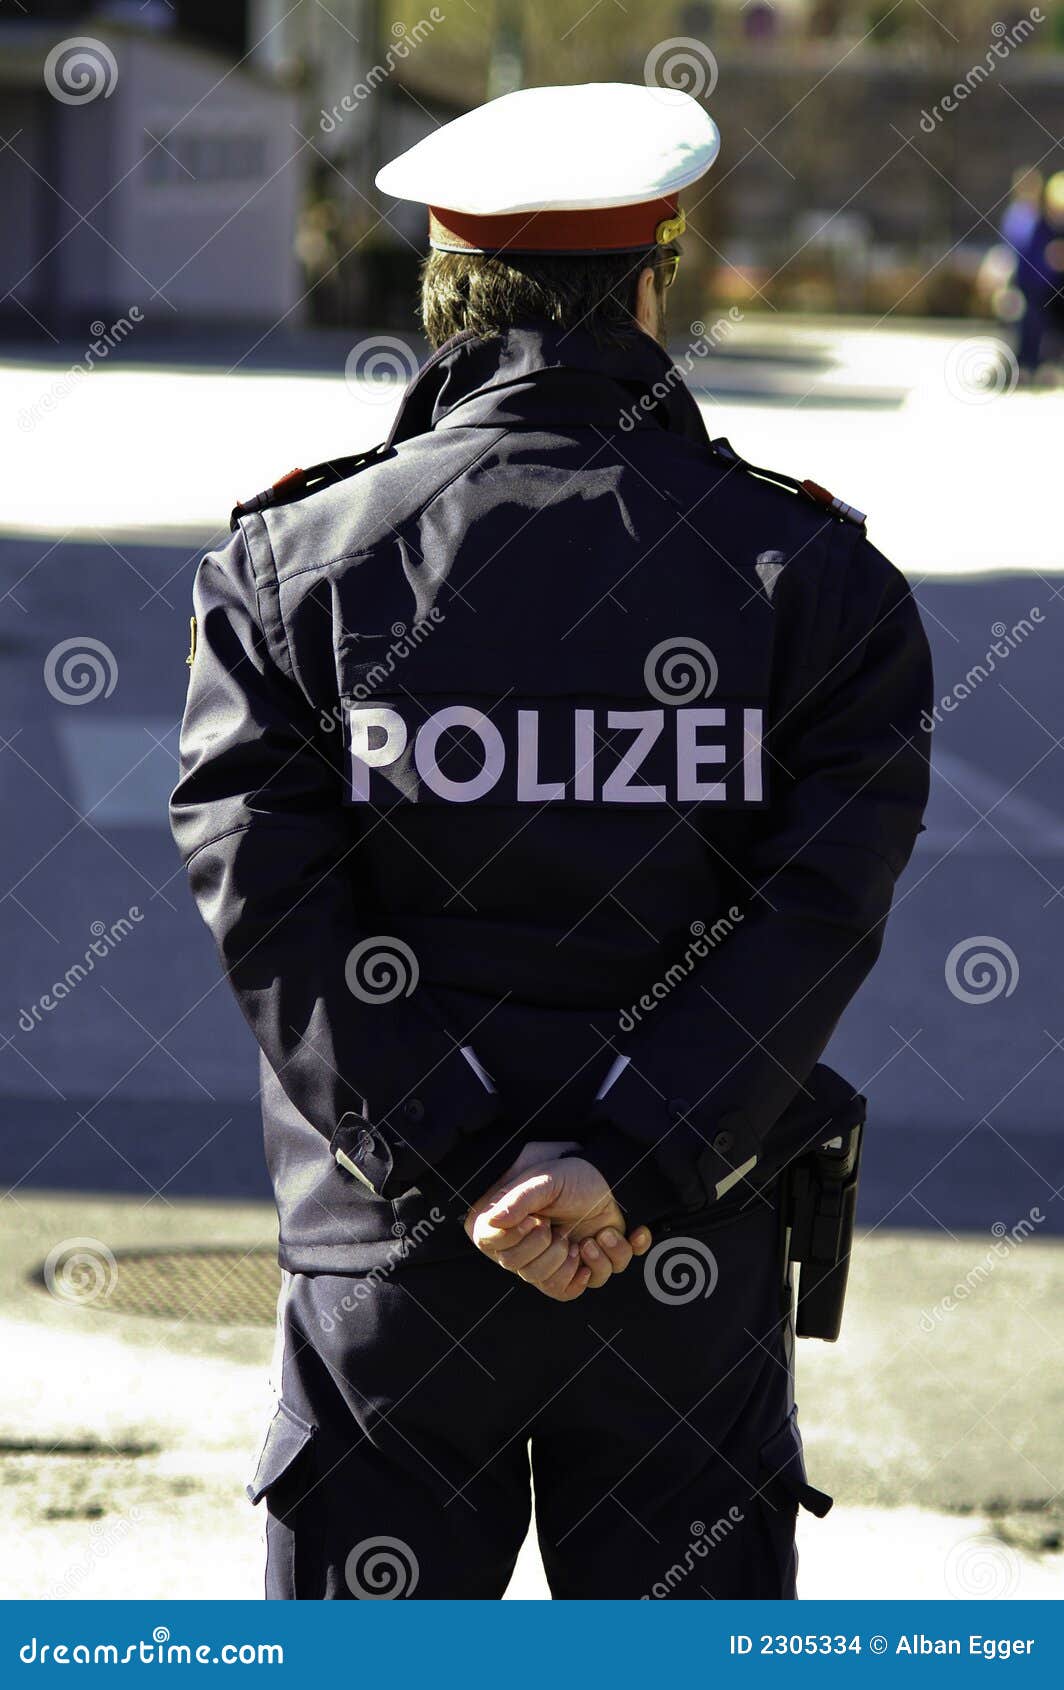 Polizei stock photo. Image of control, inspector, german - 2305334